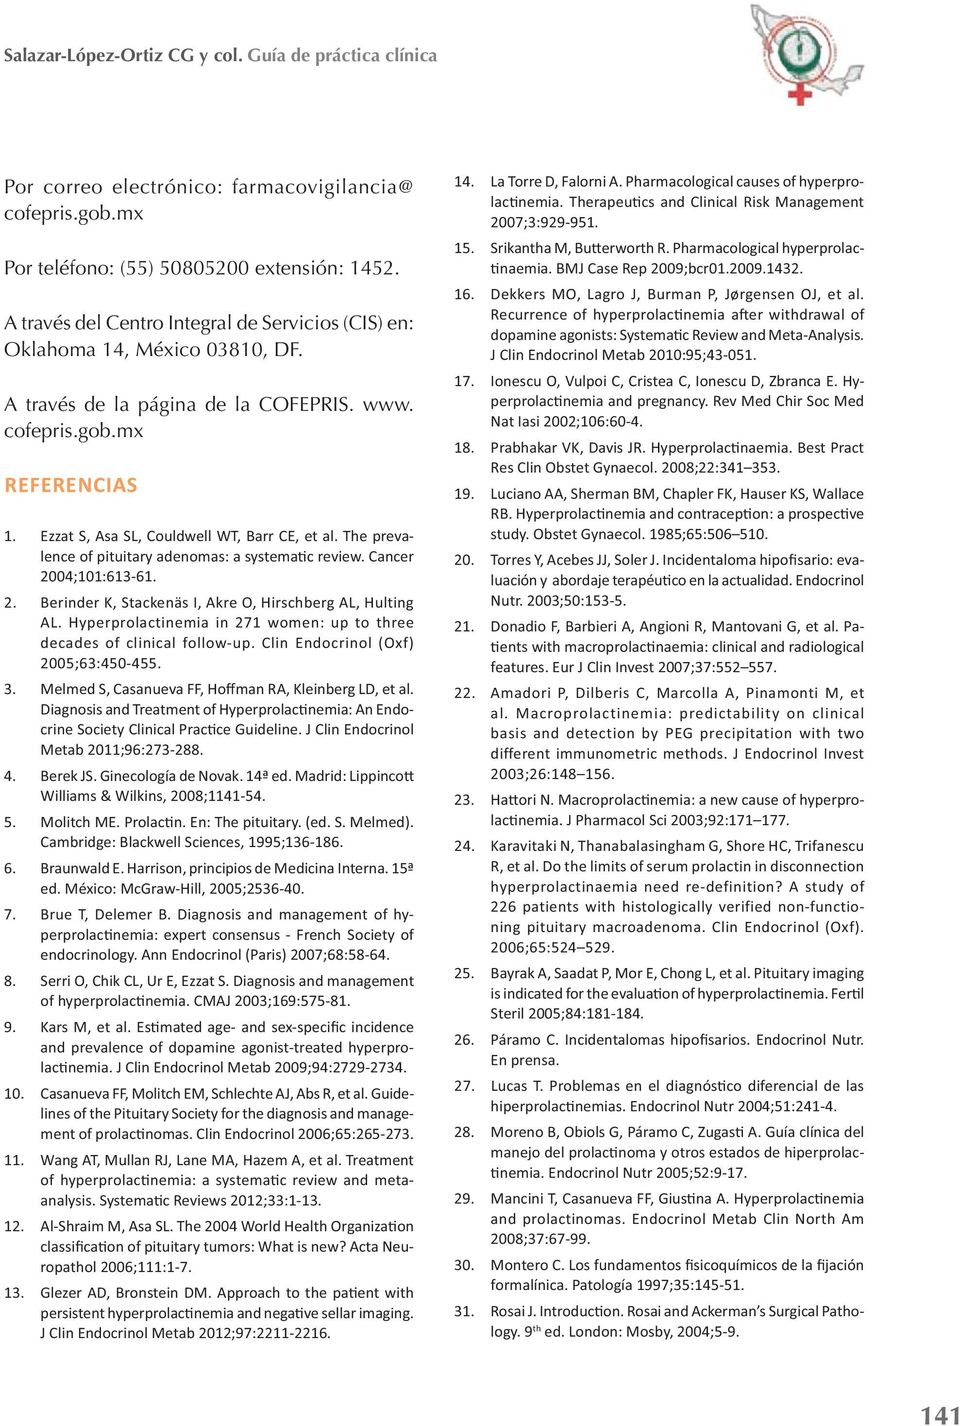 Ezzat S, Asa SL, Couldwell WT, Barr CE, et al. The preva- 2004;101:613-61. 2. Berinder K, Stackenäs I, Akre O, Hirschberg AL, Hulting AL.